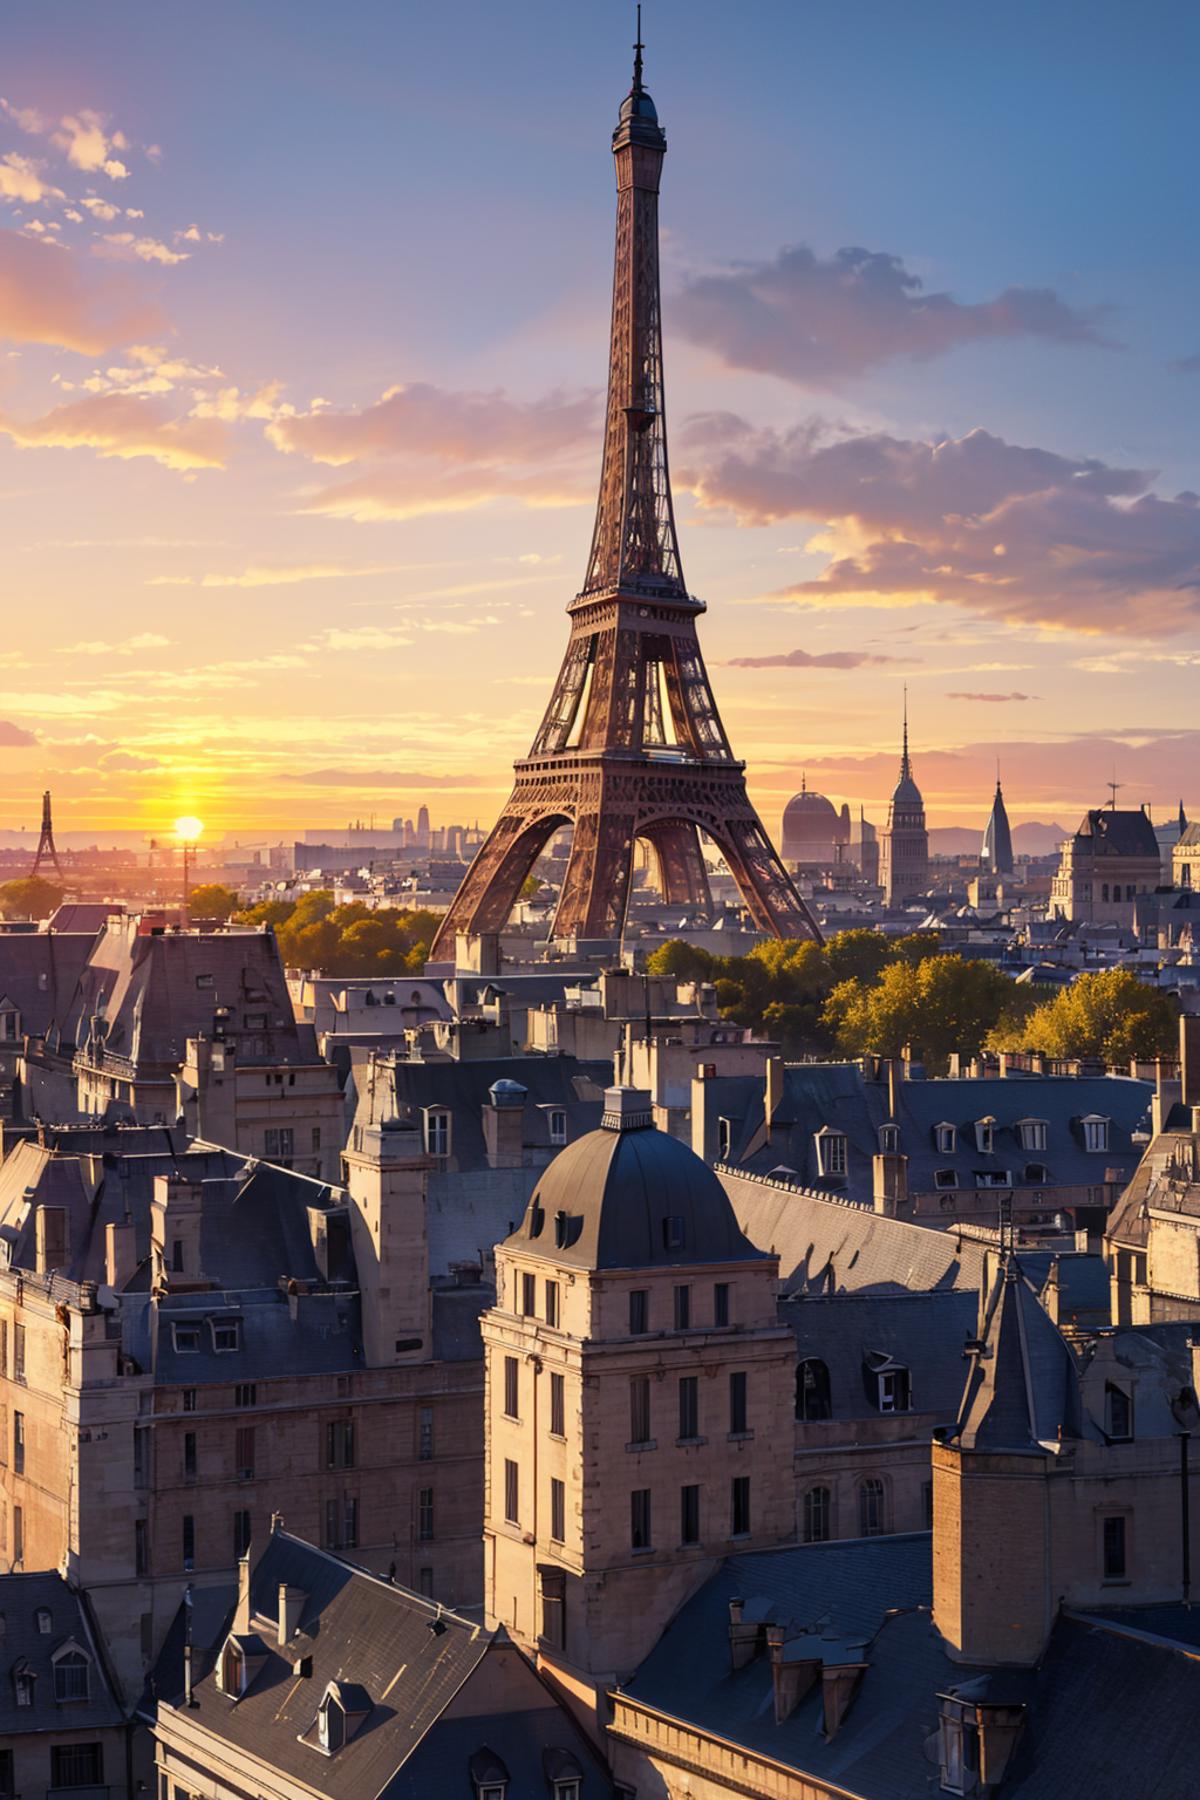 Eiffel Tower image by Tokugawa